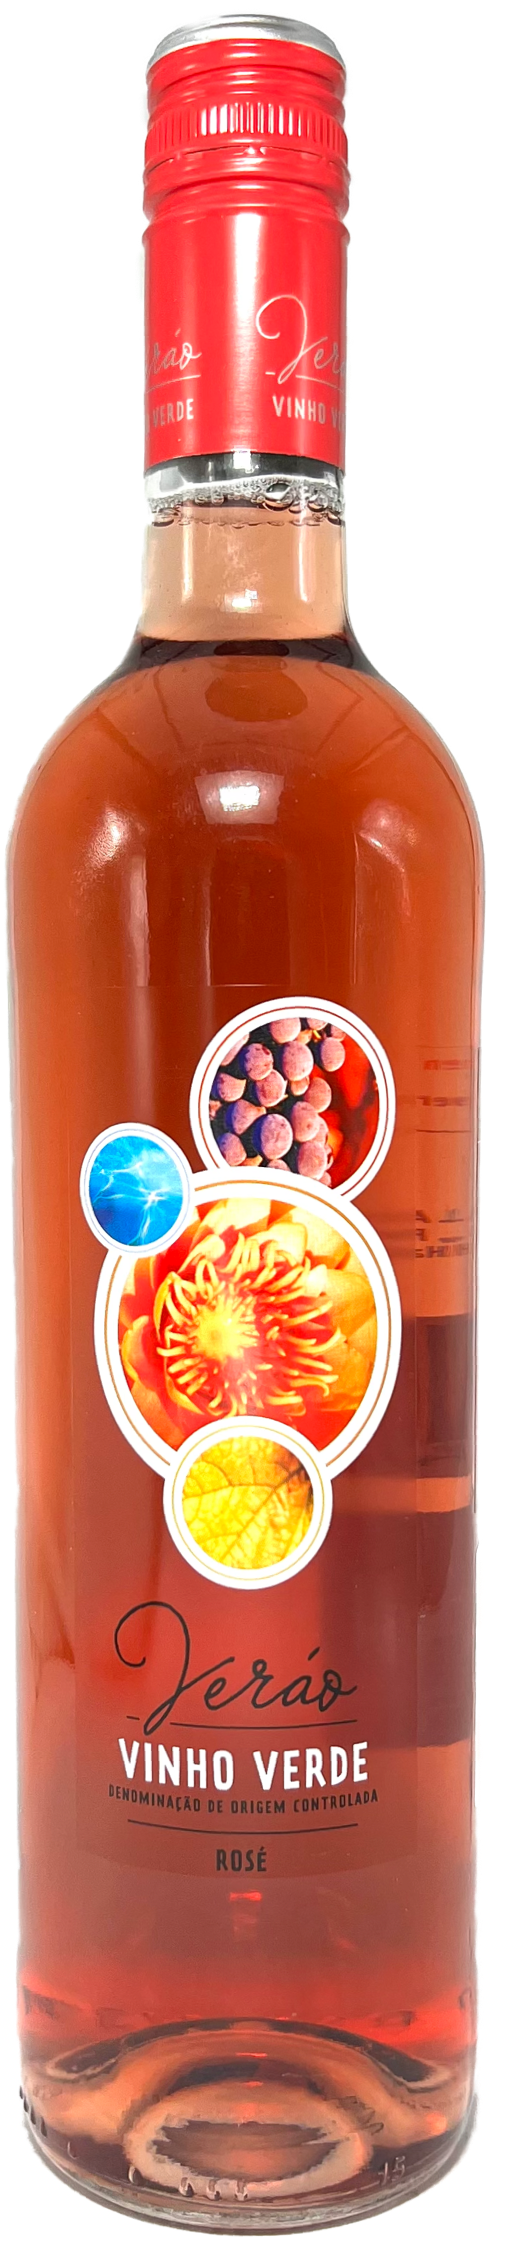 Verao Vinho Verde Rose halbtrocken 11% vol. 0,75L